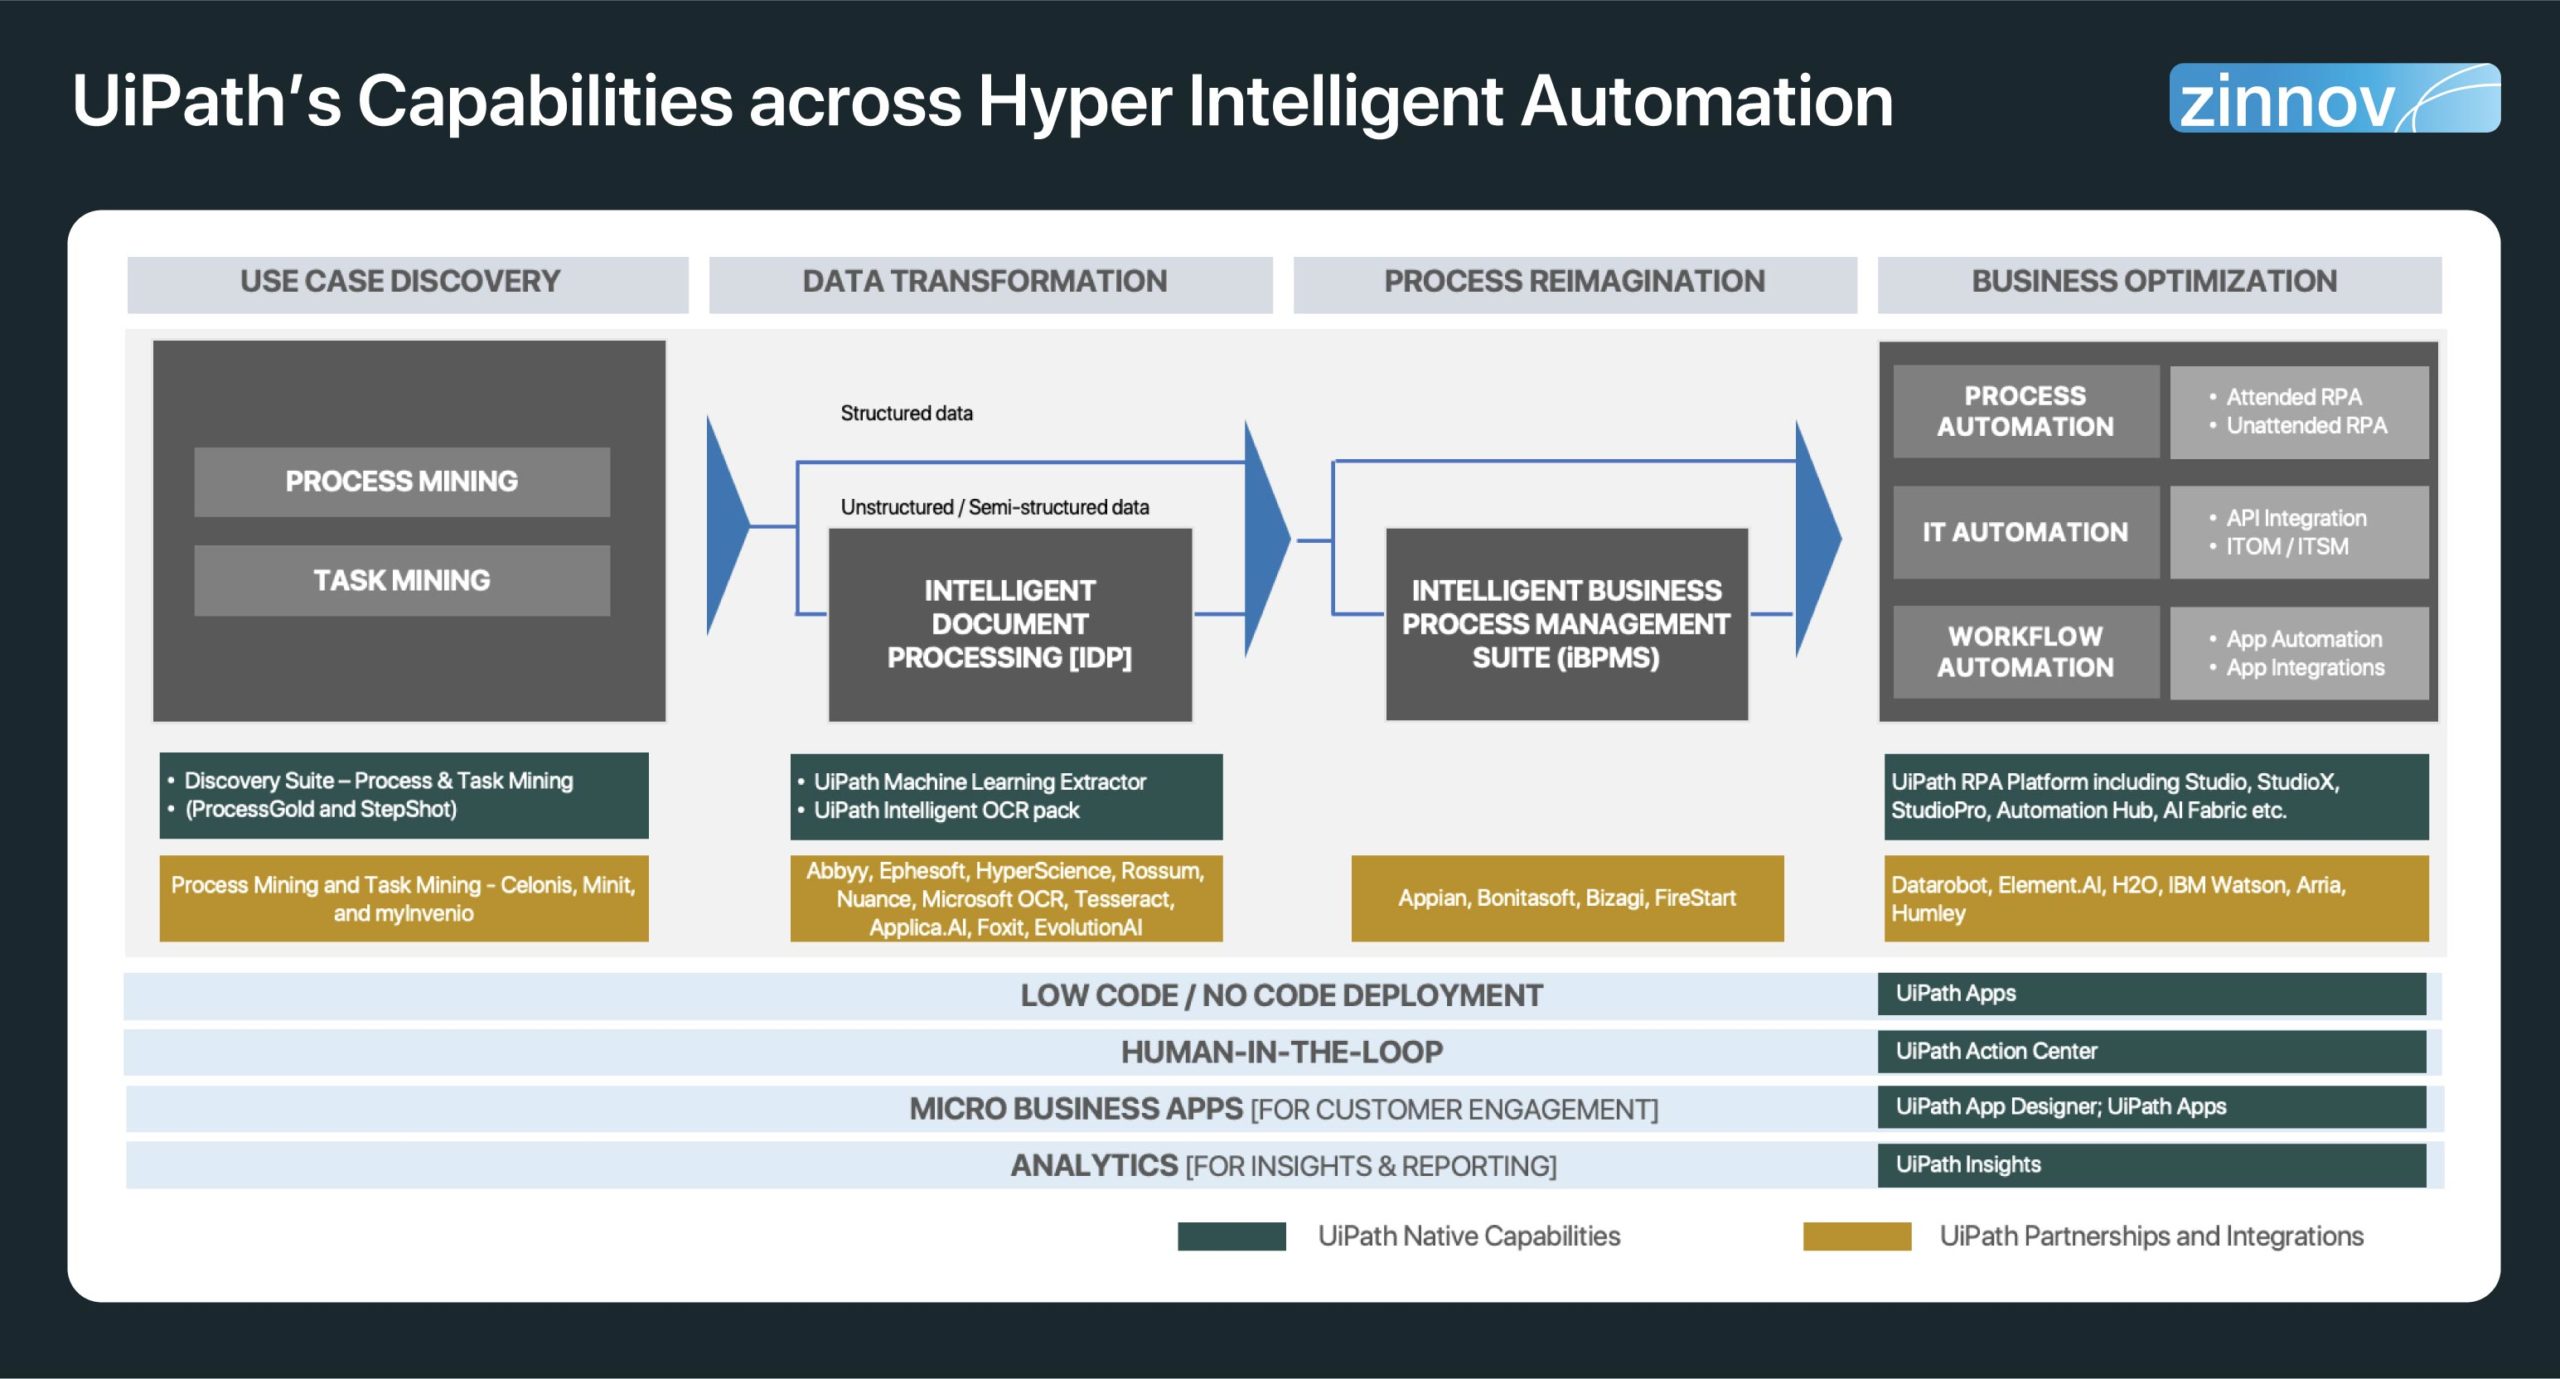 UiPath's capabilities across hyper intelligent automation